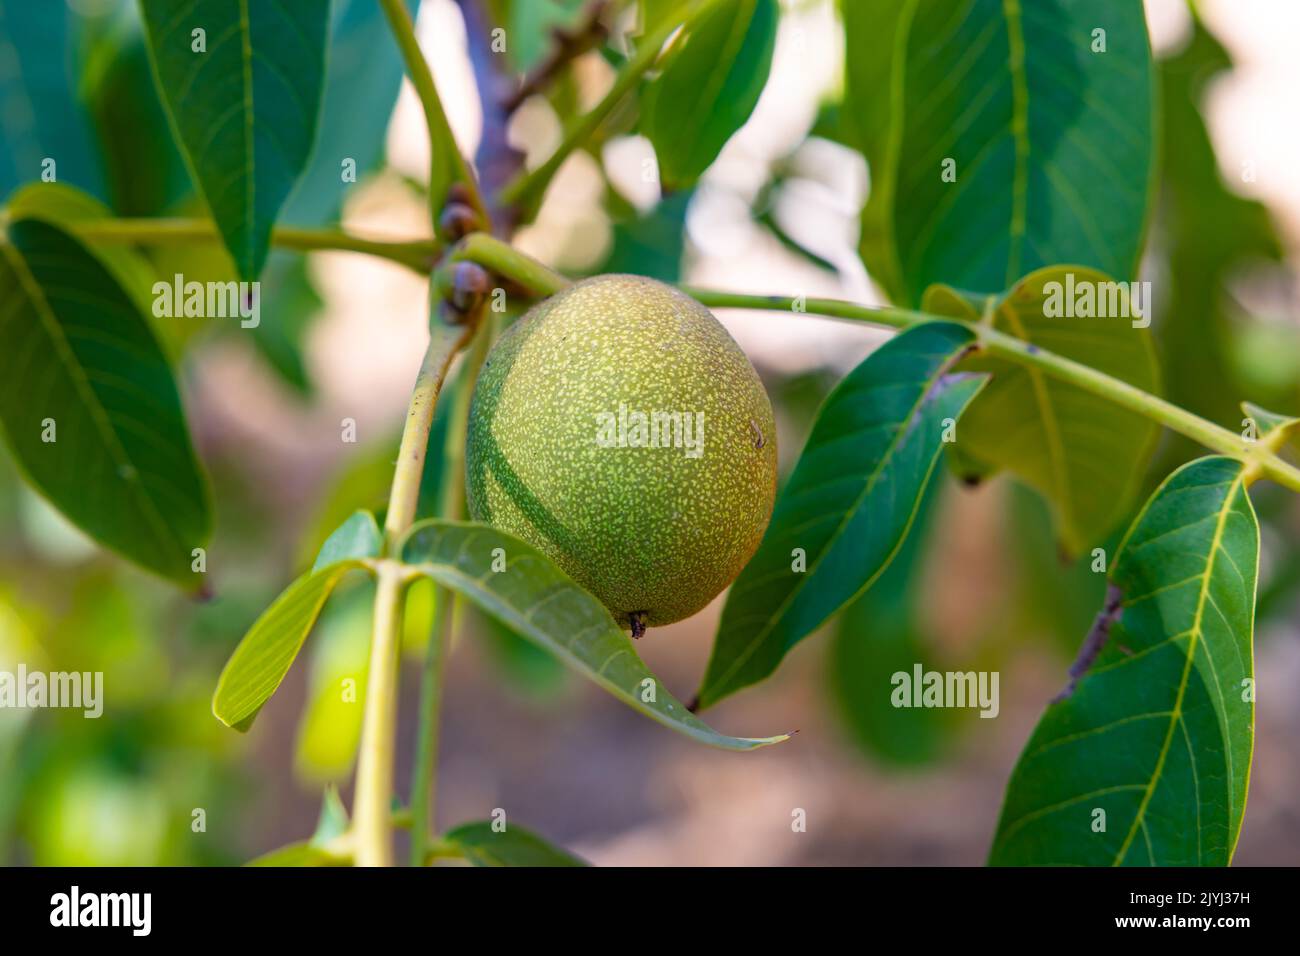 Walnut on branch. A raw green walnut on the tree. Fruit farming Stock Photo